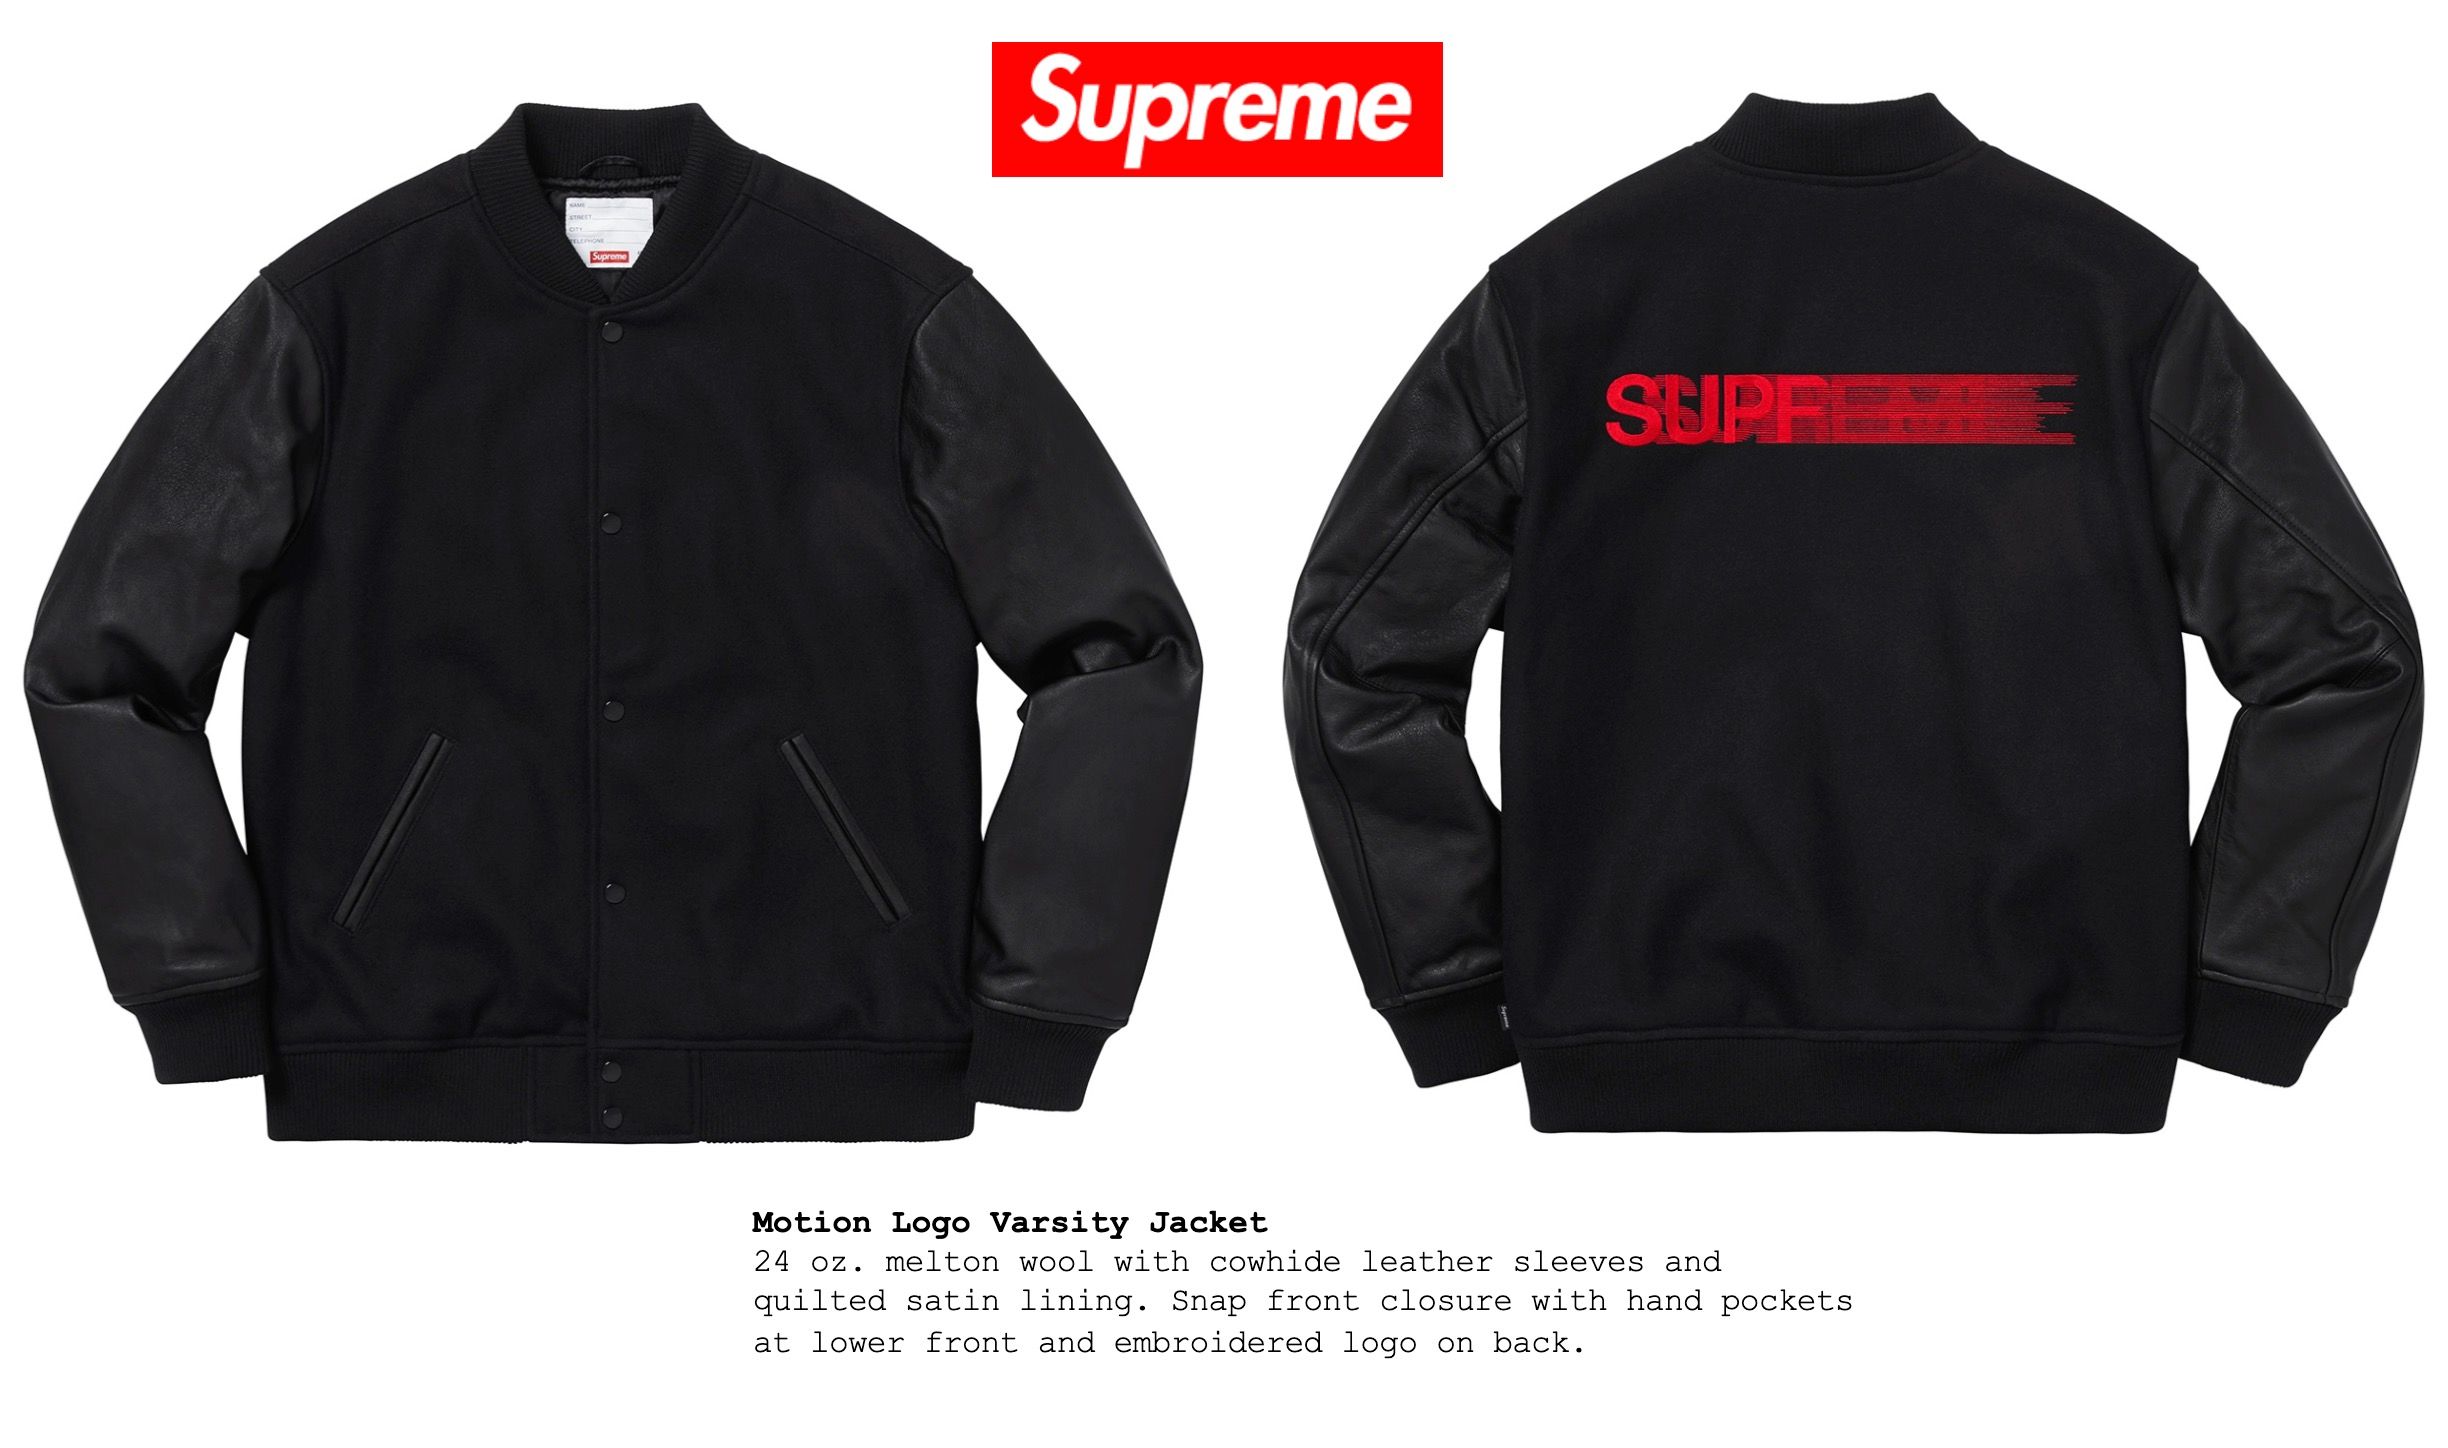 Supreme Supreme Motion Logo Varsity Jacket | Grailed